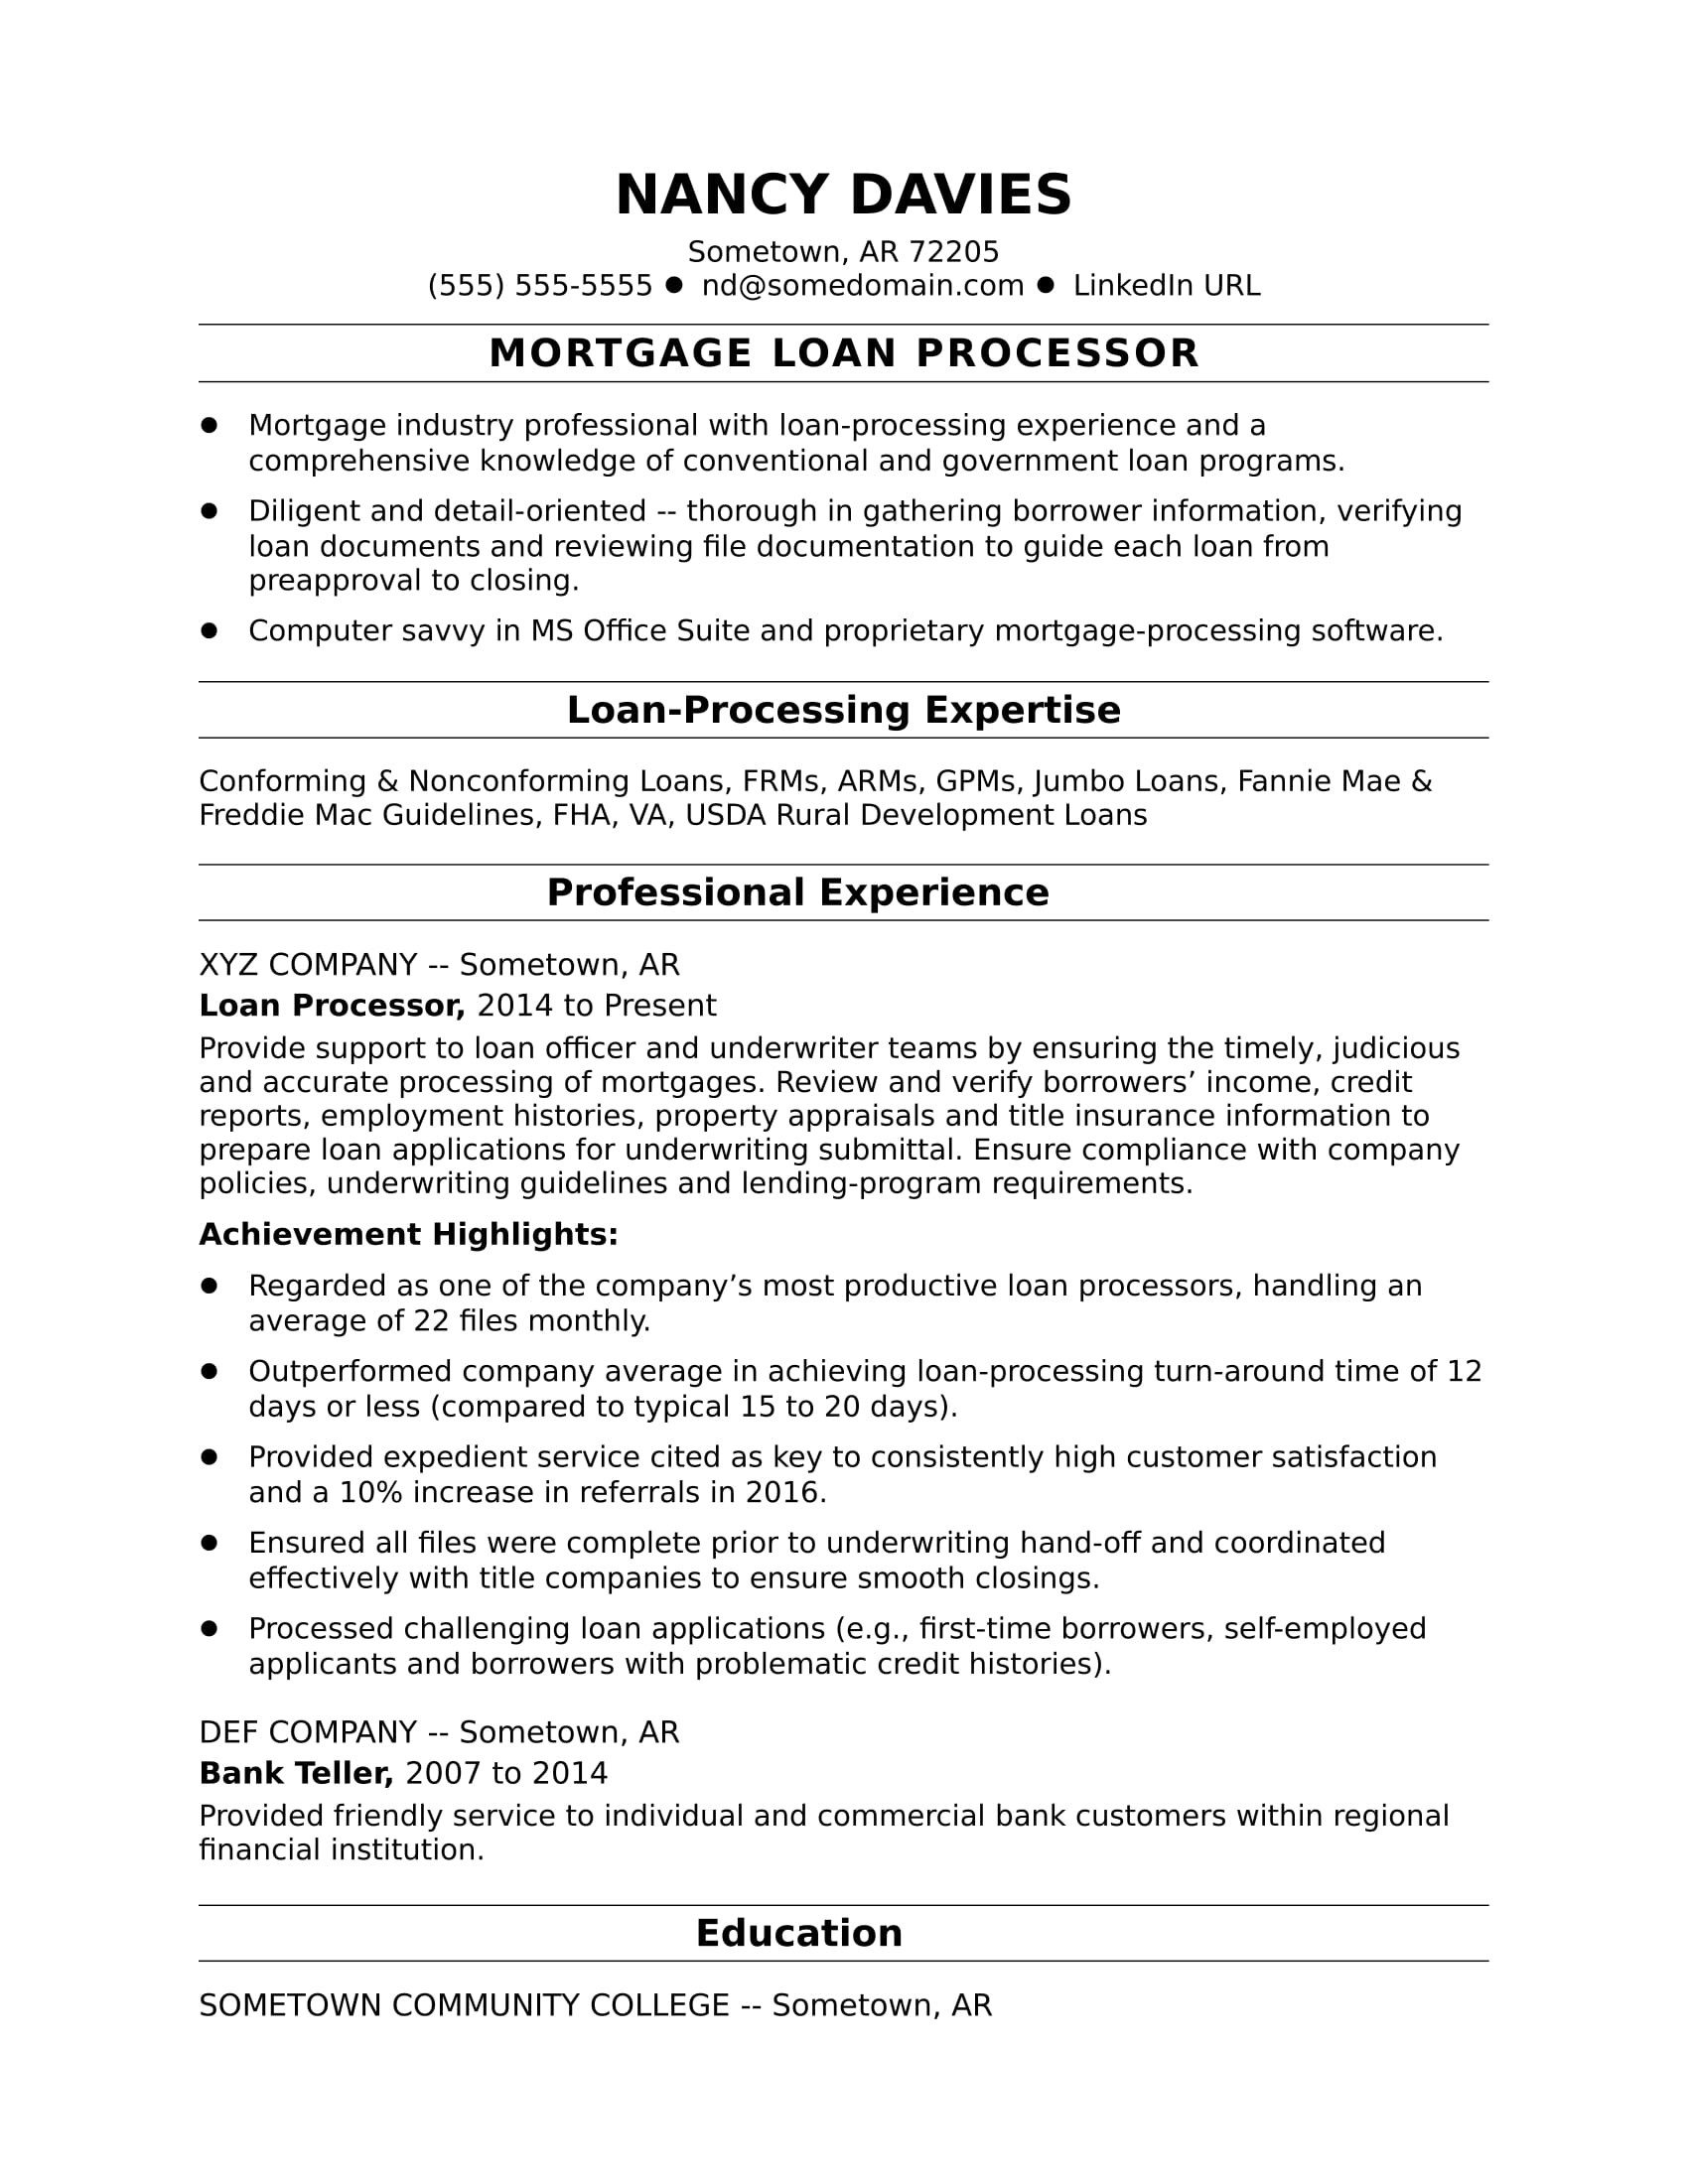 sample resume mortgage loan processor